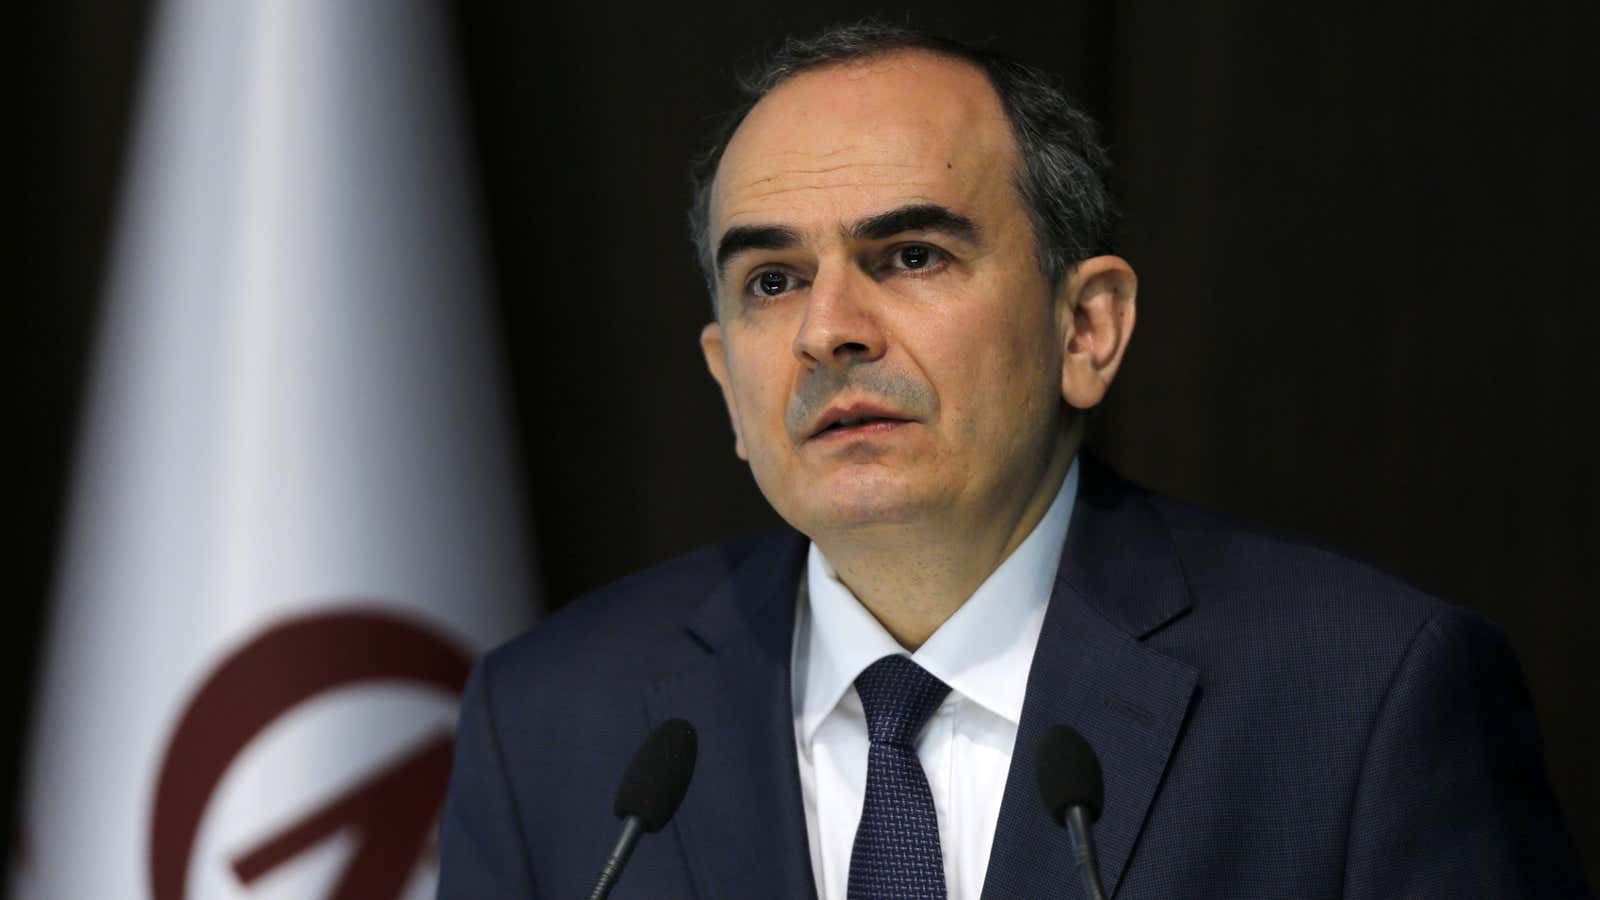 Turkey’s central bank governor Erdem Basci asserts his independence.